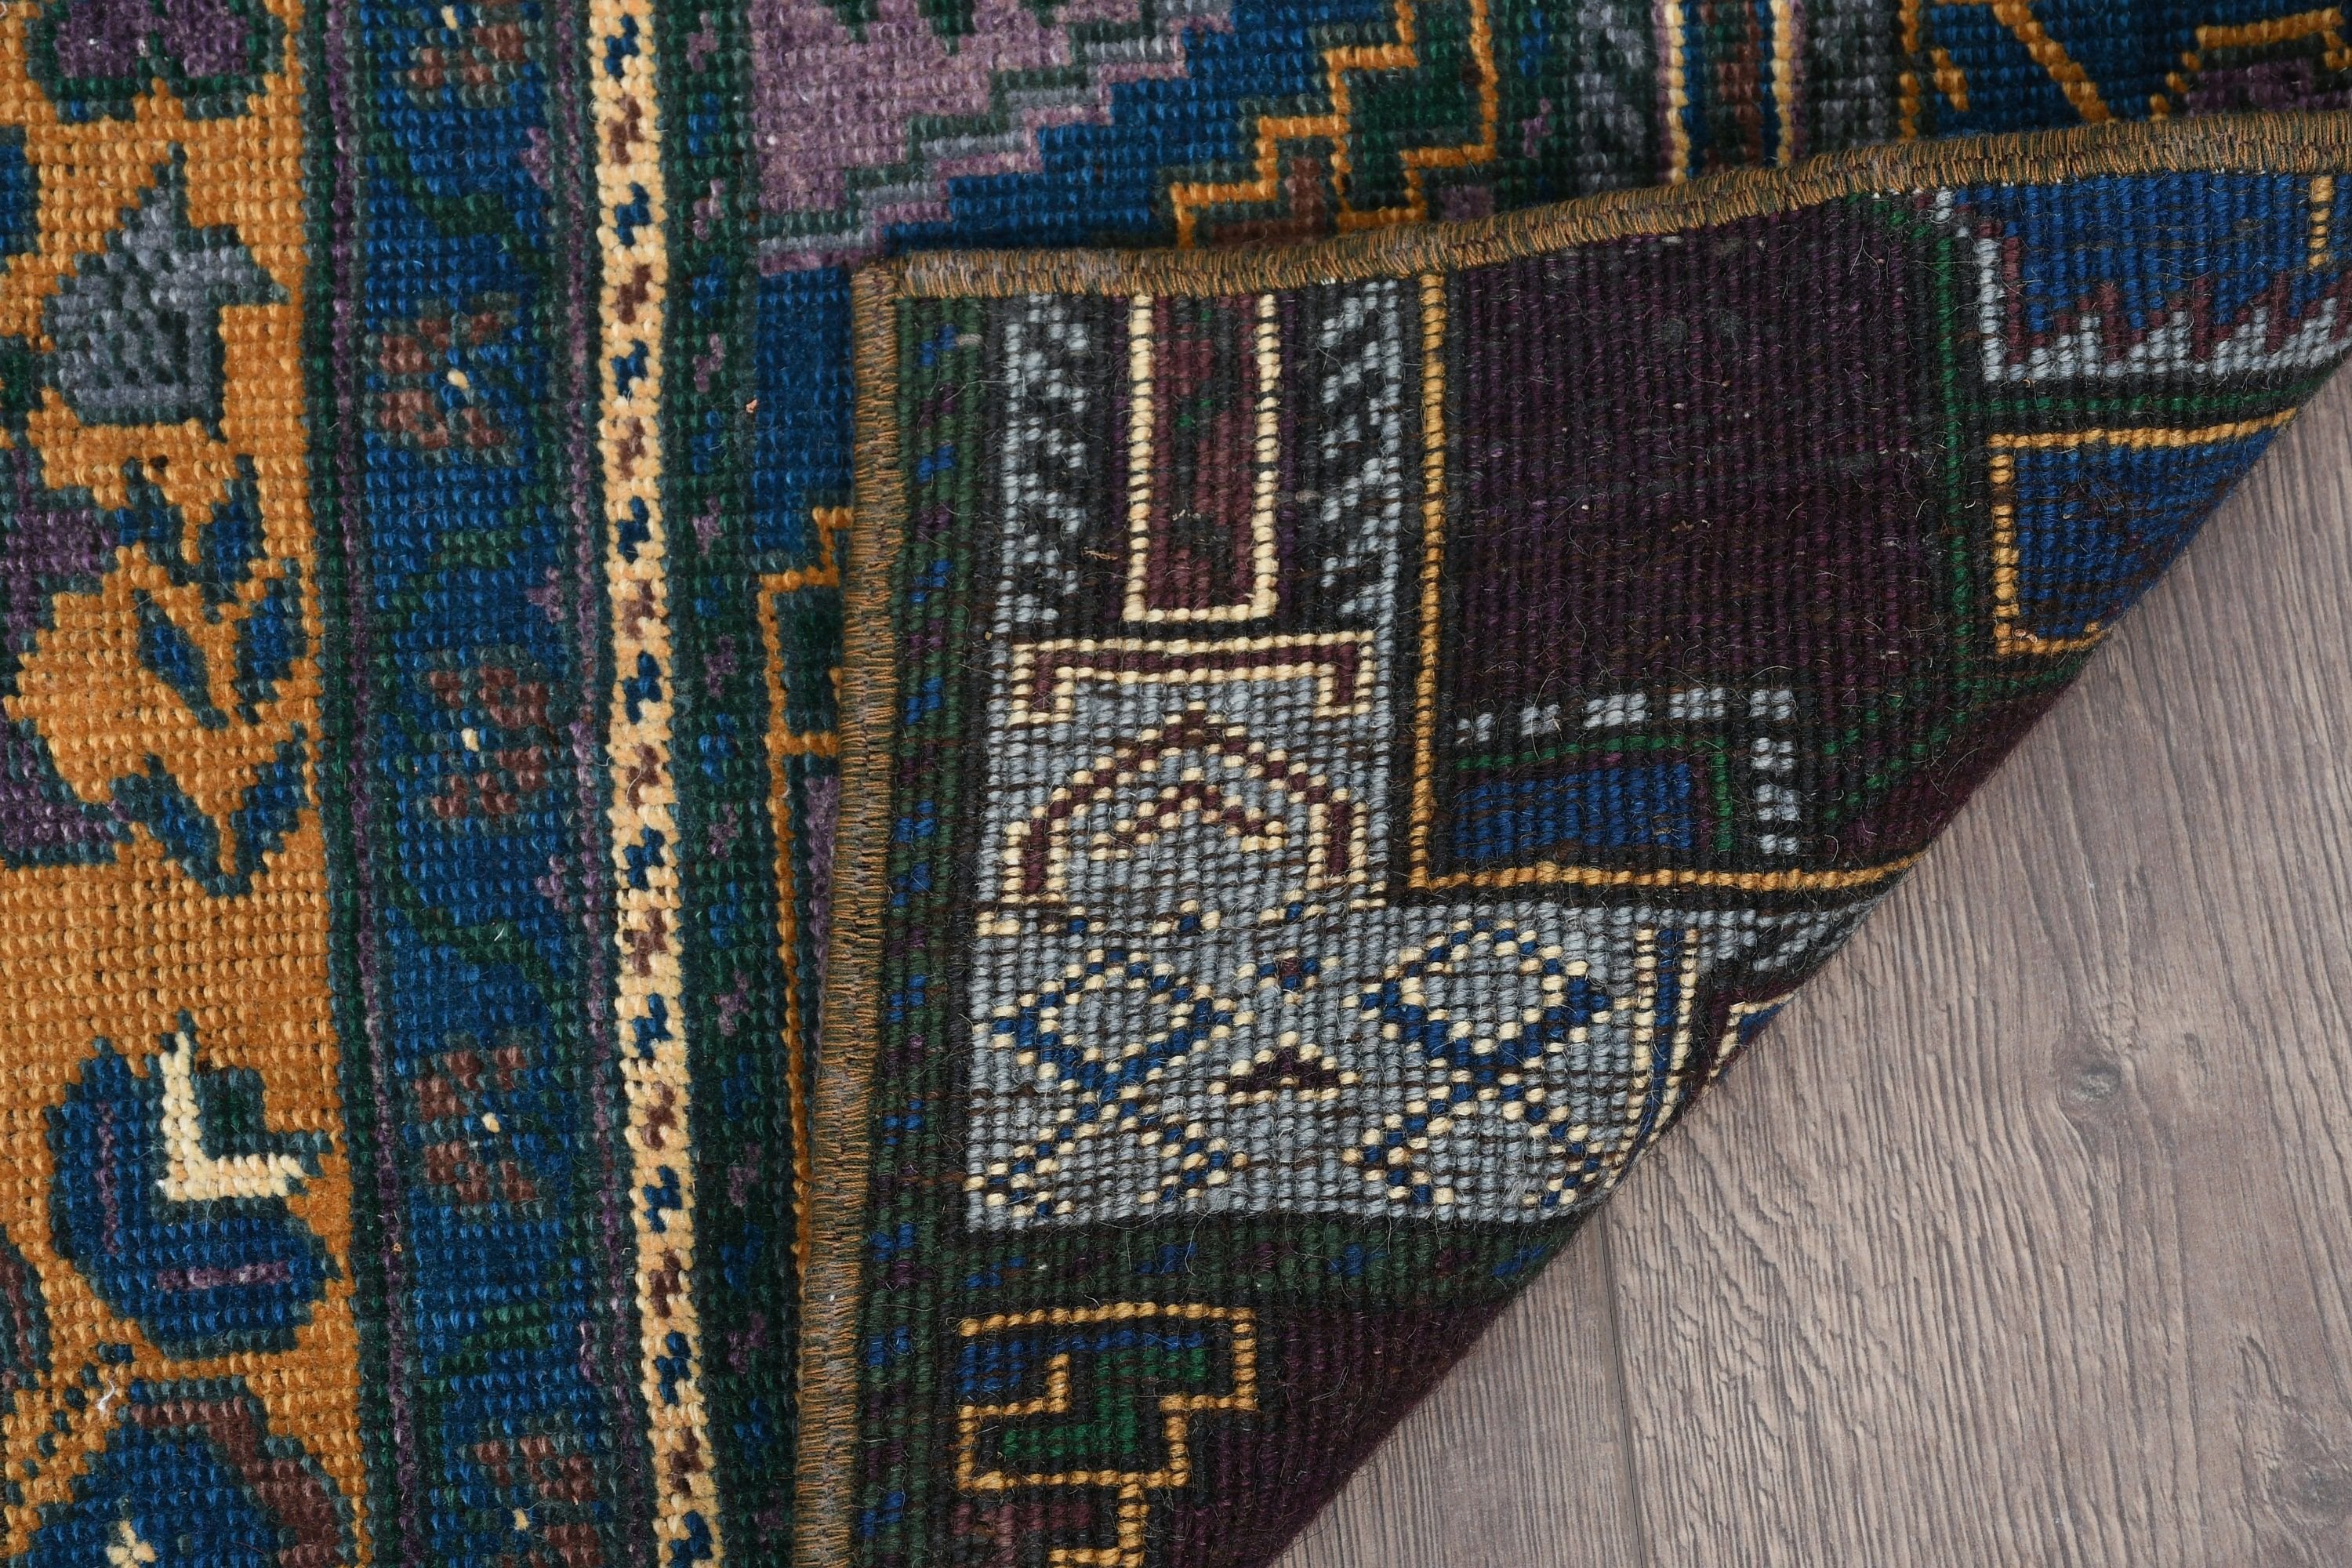 Anatolian Rugs, Rugs for Bedroom, Blue Cool Rugs, Door Mat Rug, Bedroom Rug, 1.4x3.5 ft Small Rug, Turkish Rug, Aesthetic Rugs, Vintage Rug